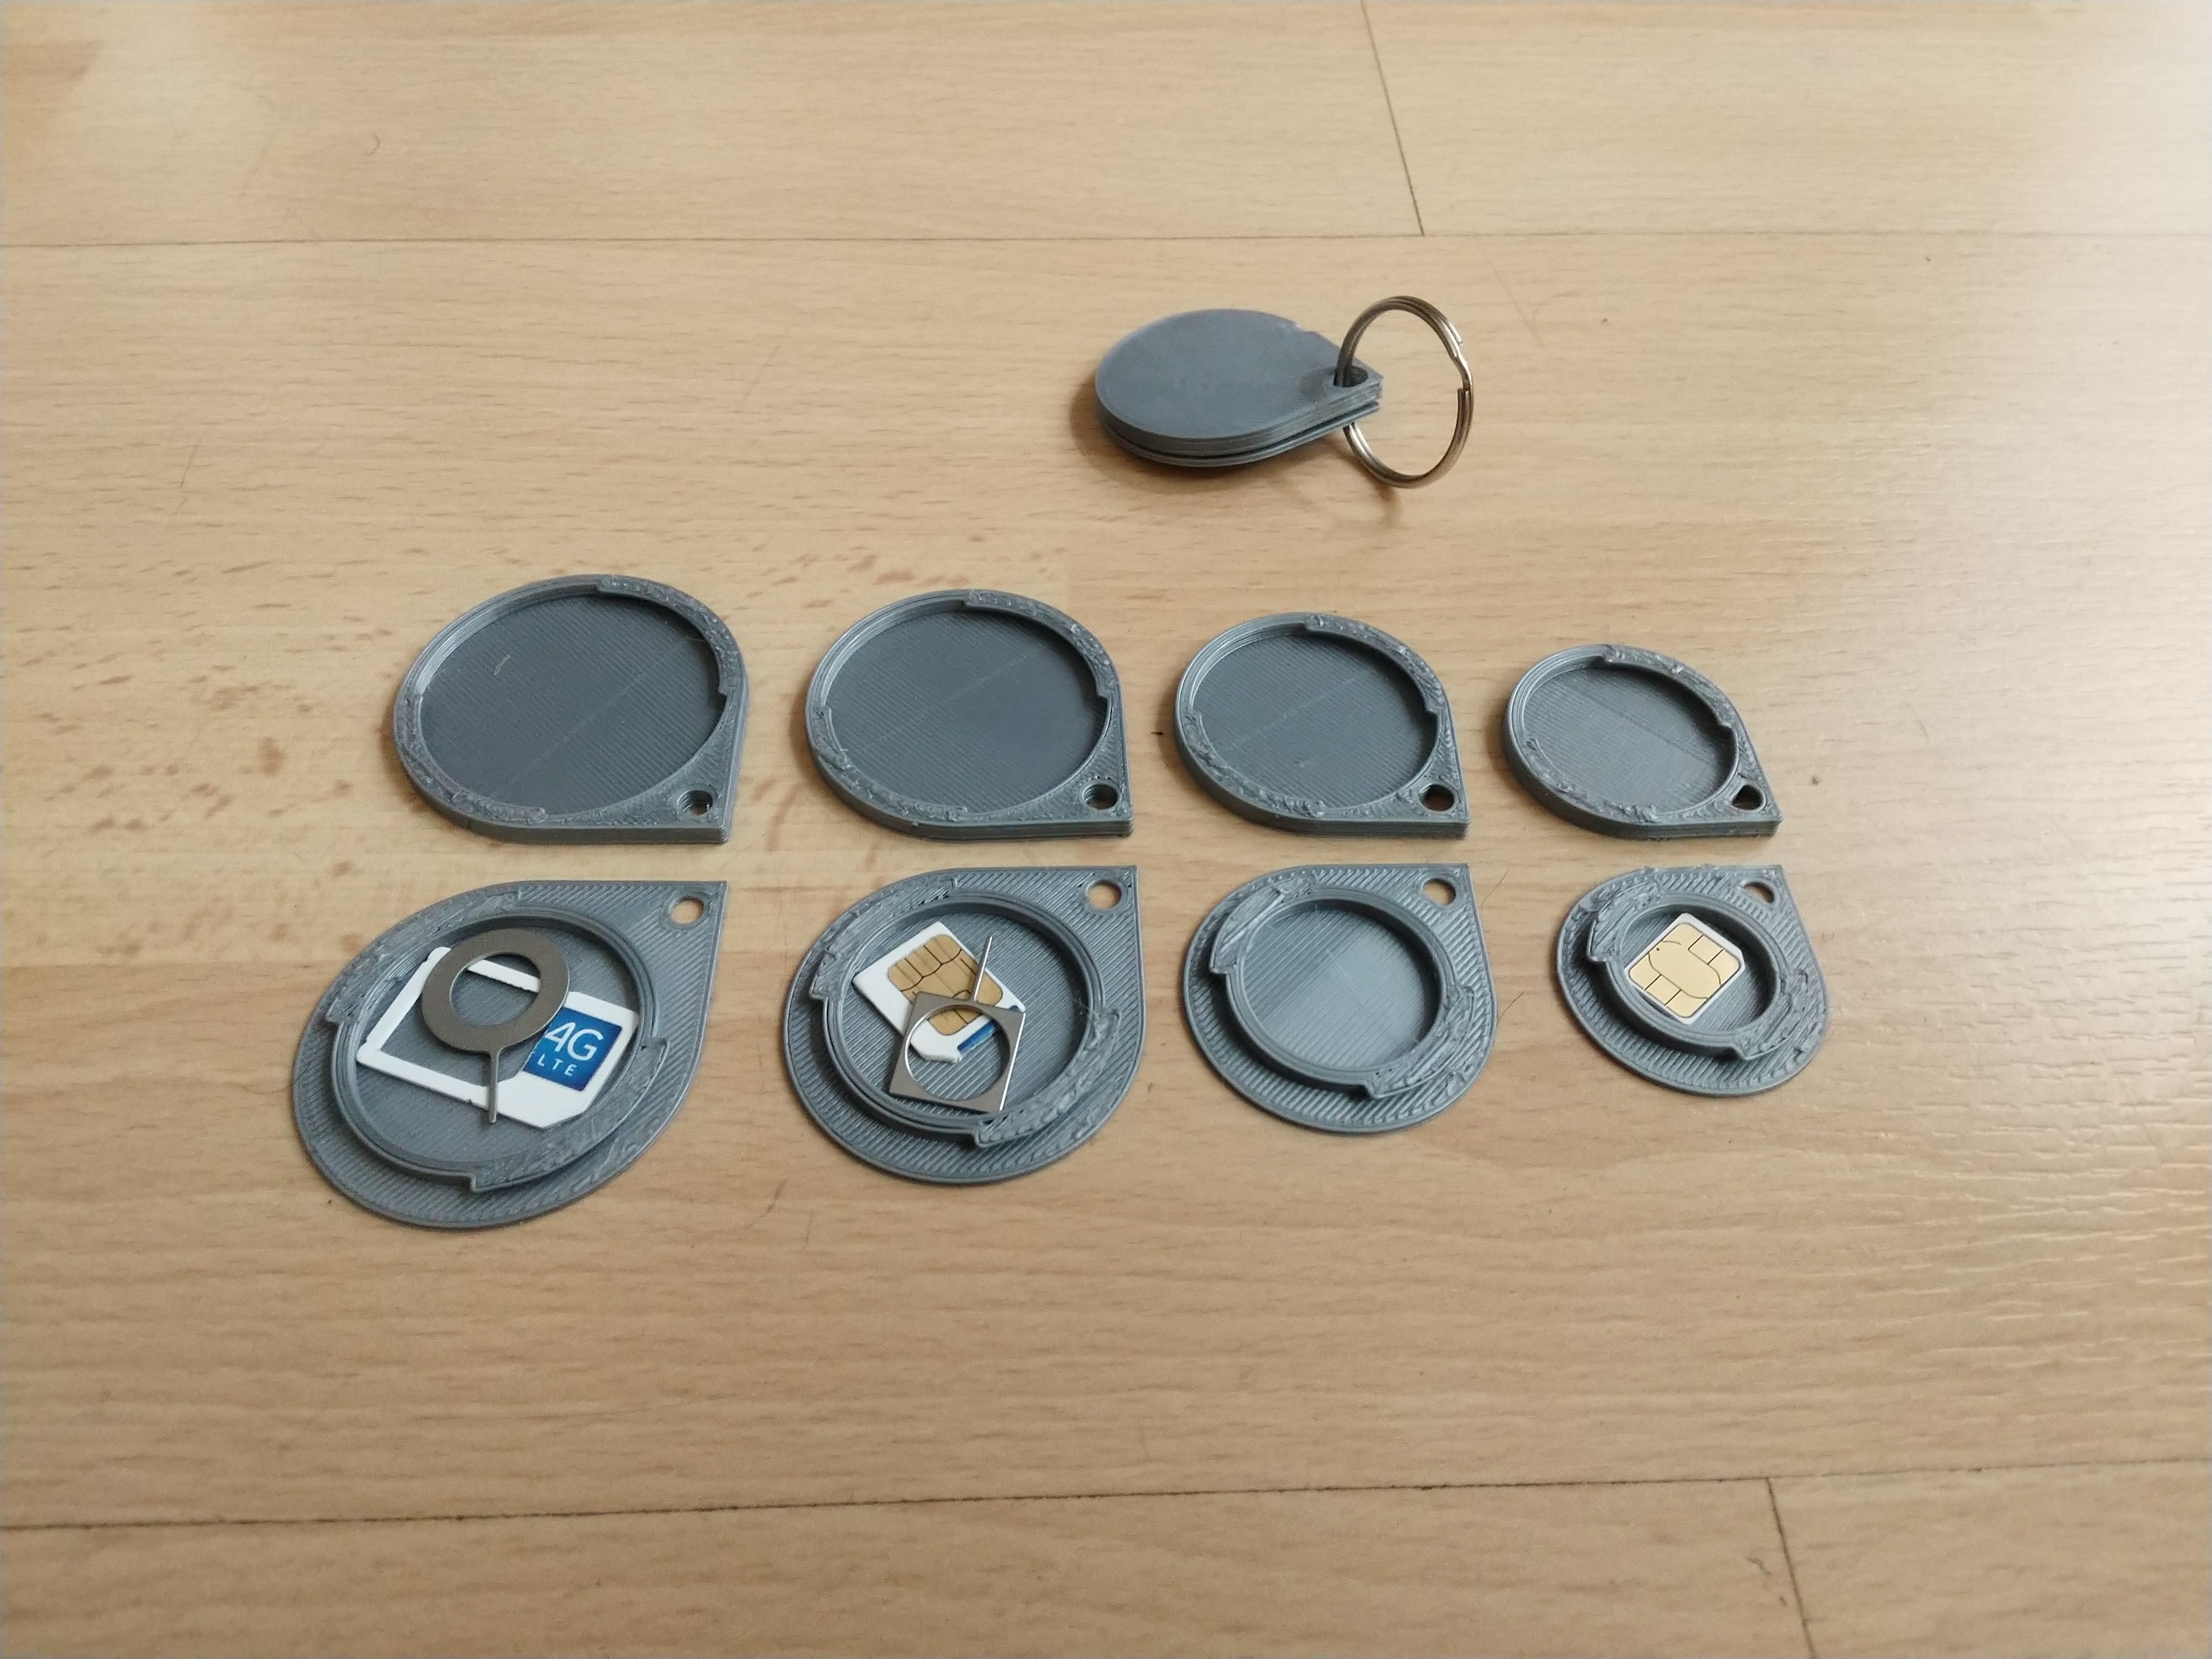 3D Printed Keychain Connector for USB Flash Drives - Patshead.com Blog